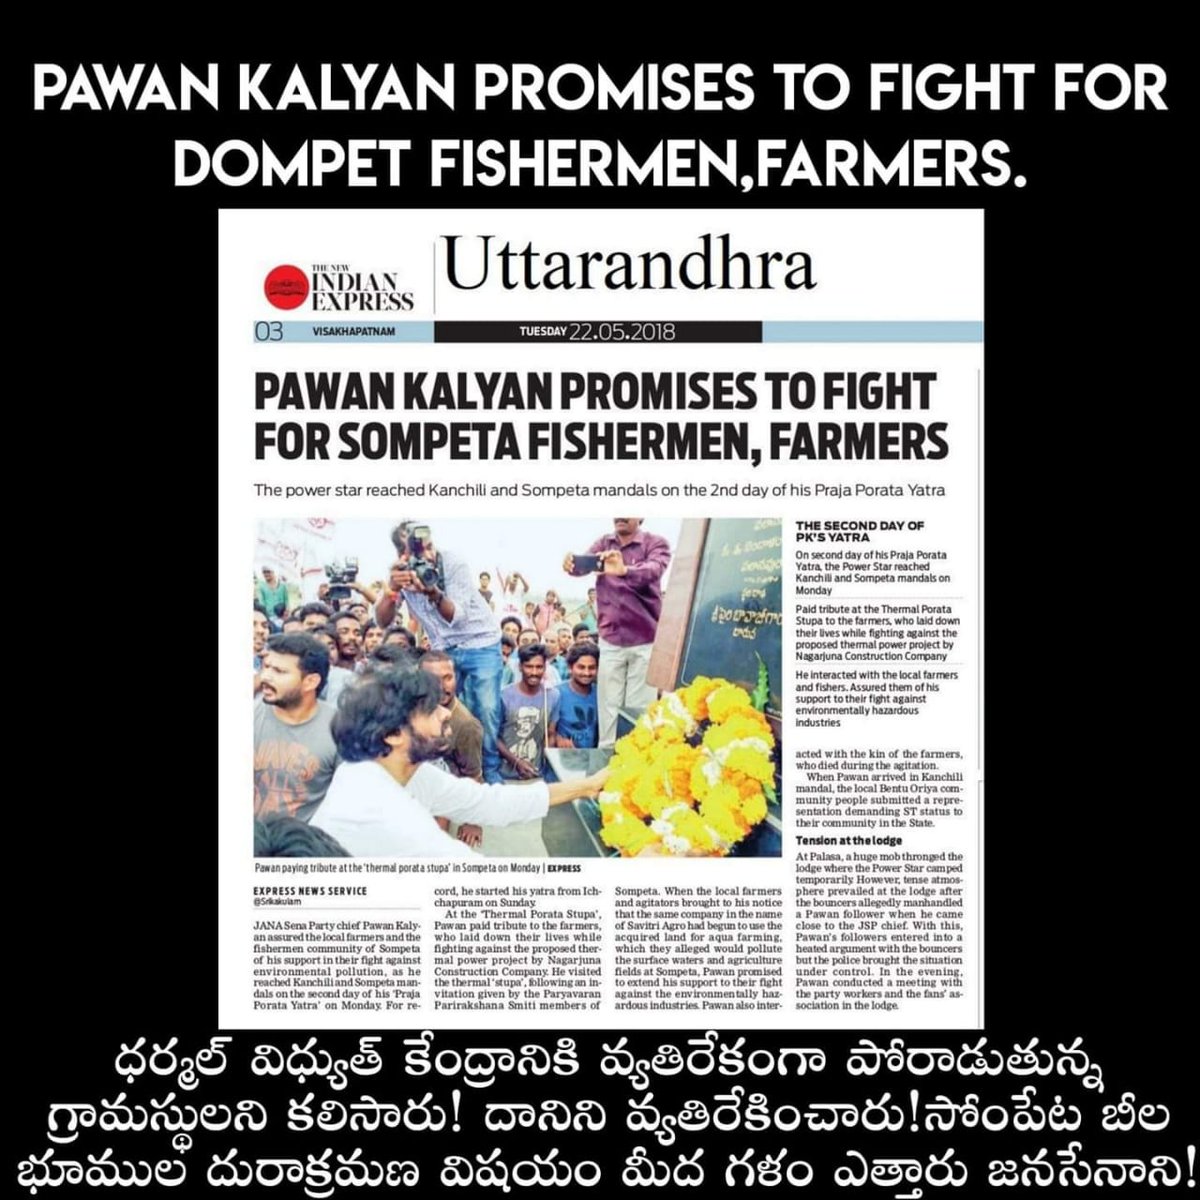 23. Pawankalyan promises to Fight for Dompet Fisherman, farmers. #IndianExpress 